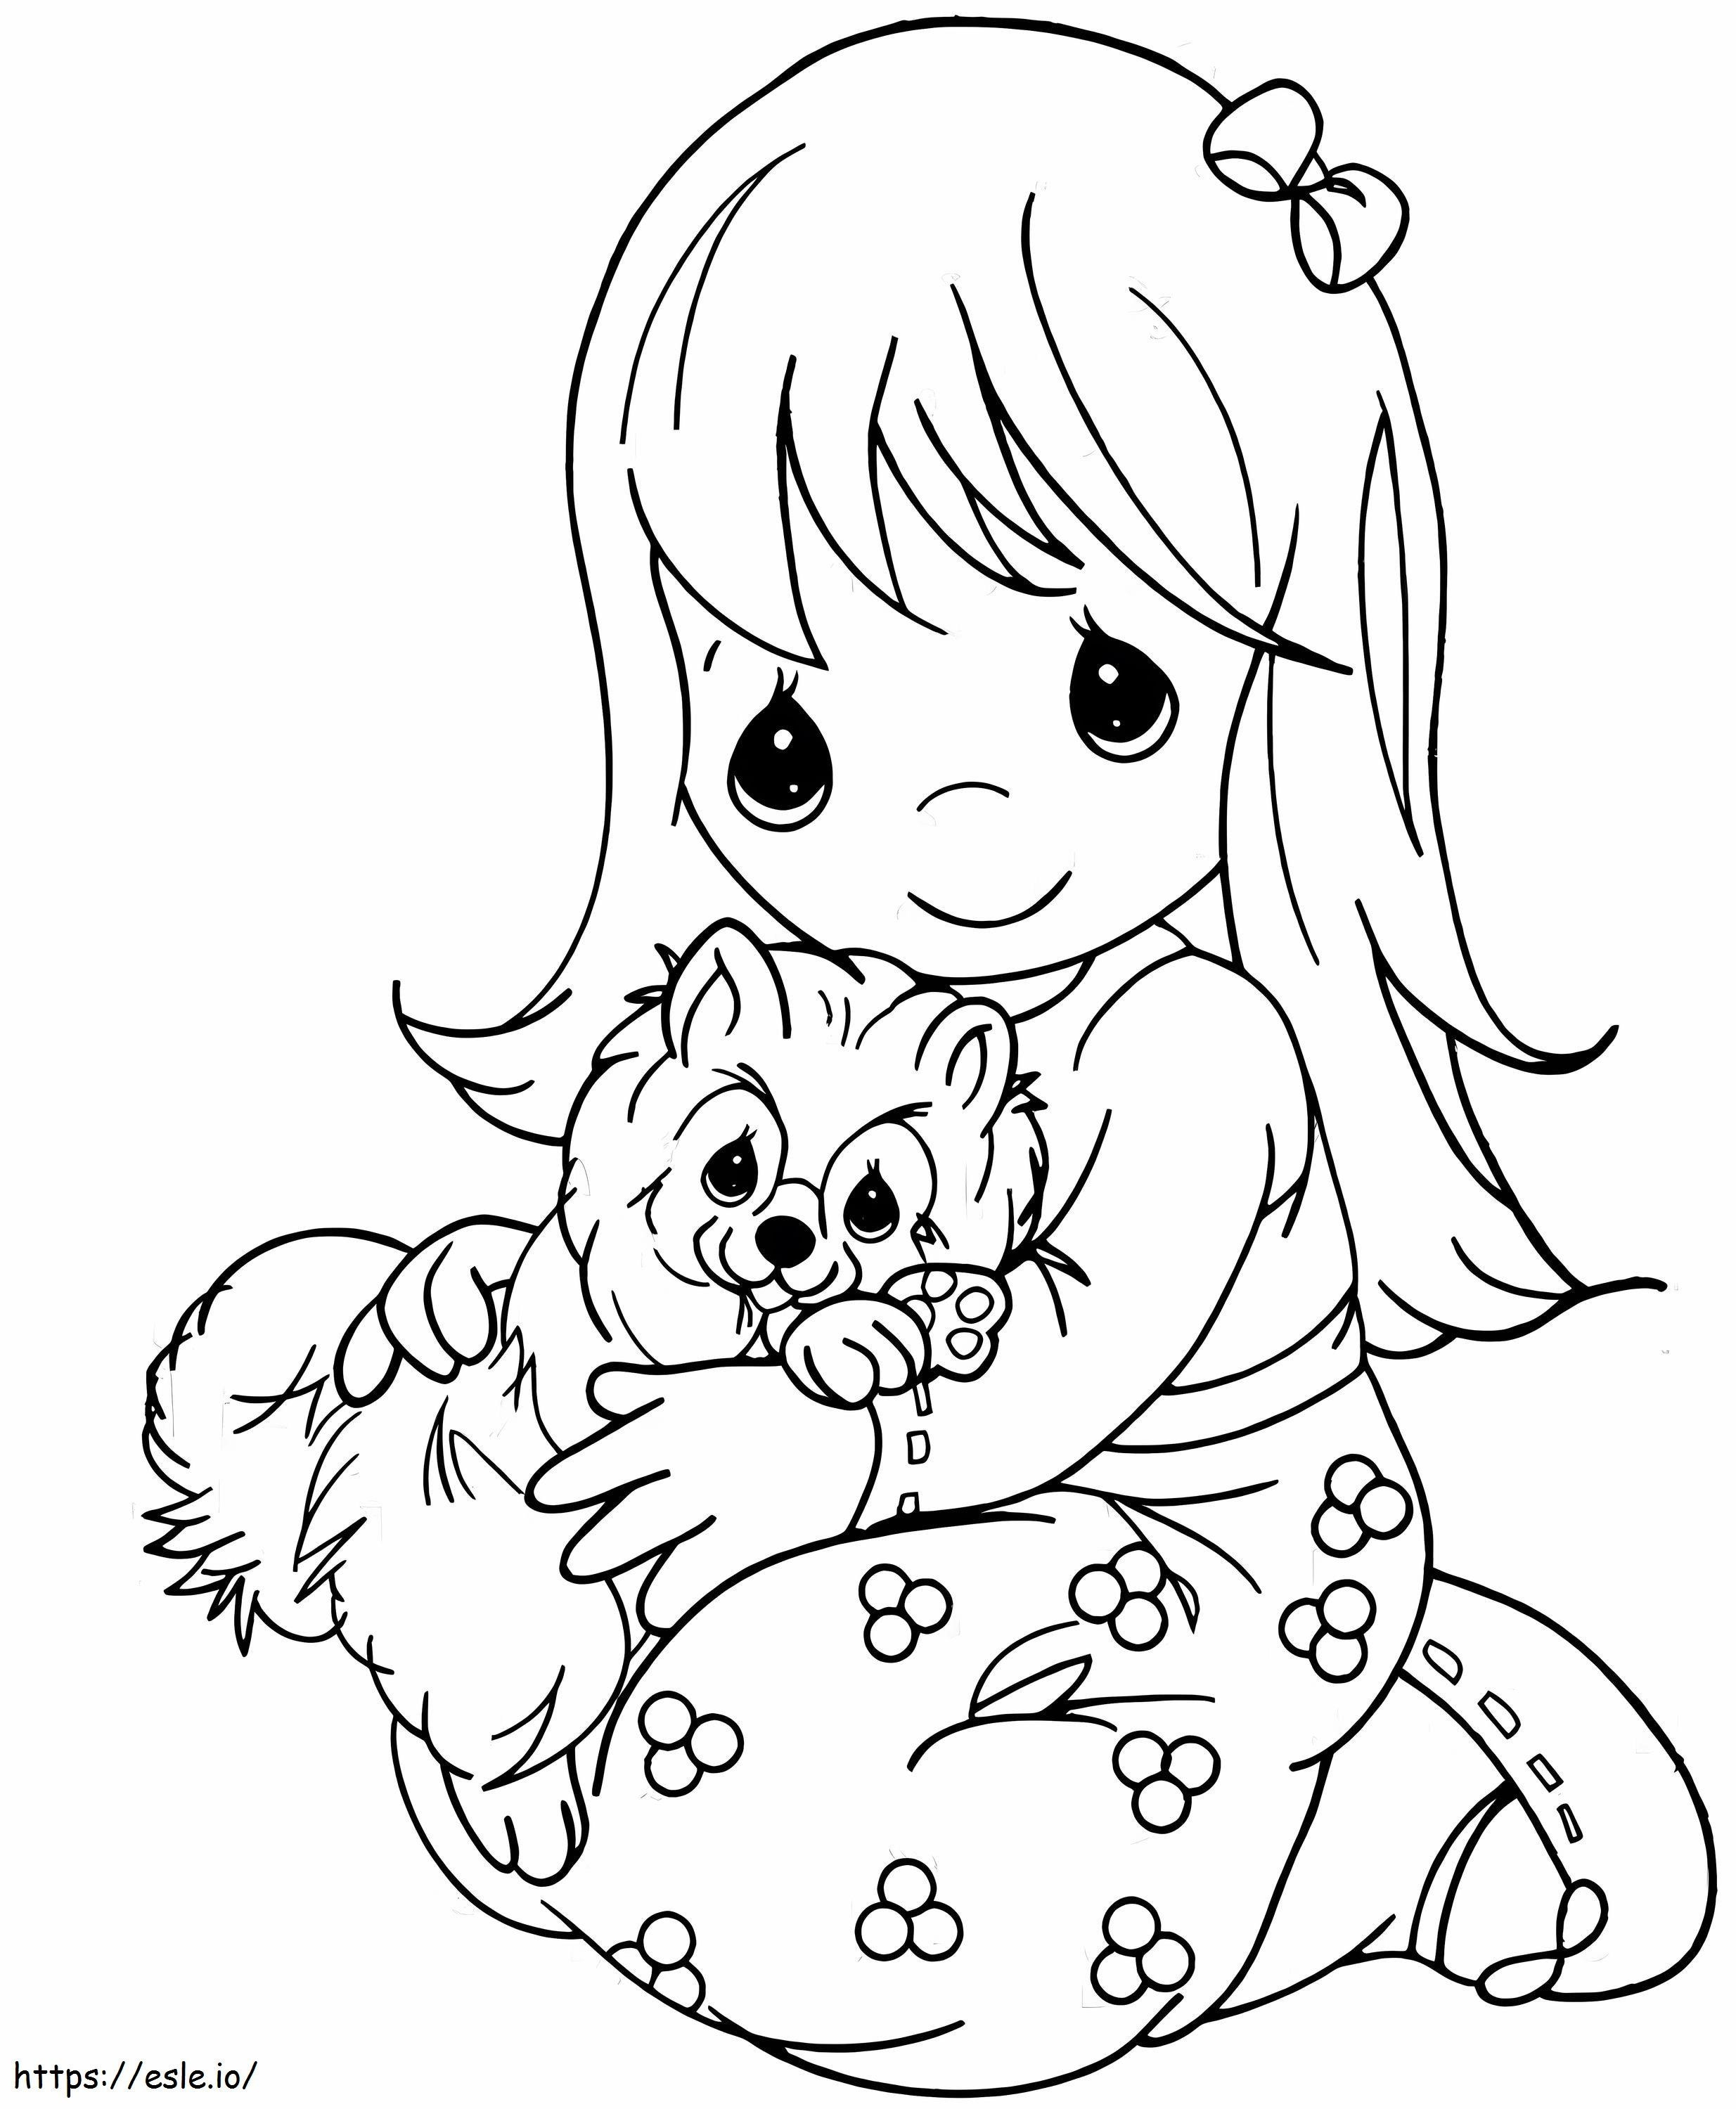 Menina abraçando cachorro para colorir